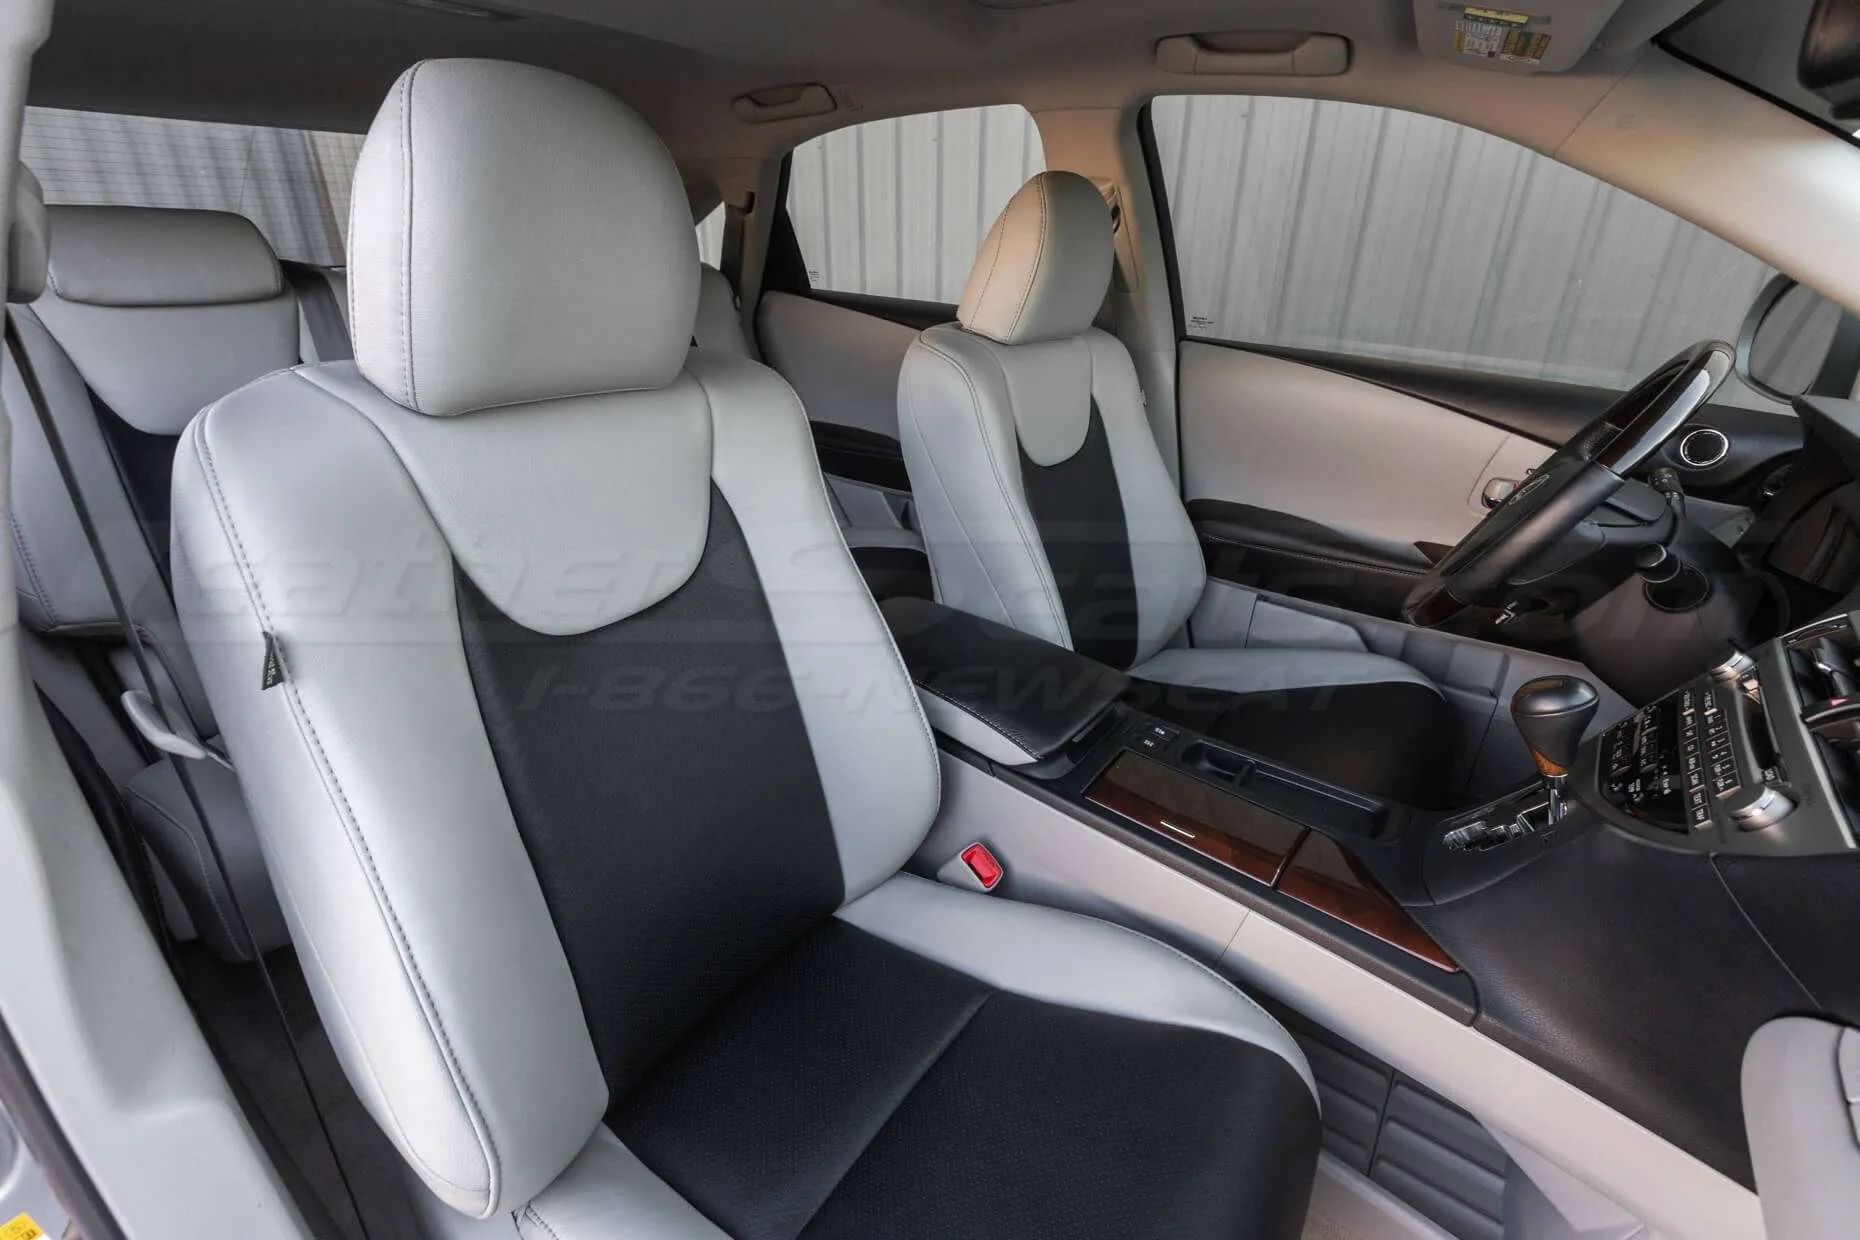 Lexus RX350 Leather Seats - Frost & Black - Front interior passenger side